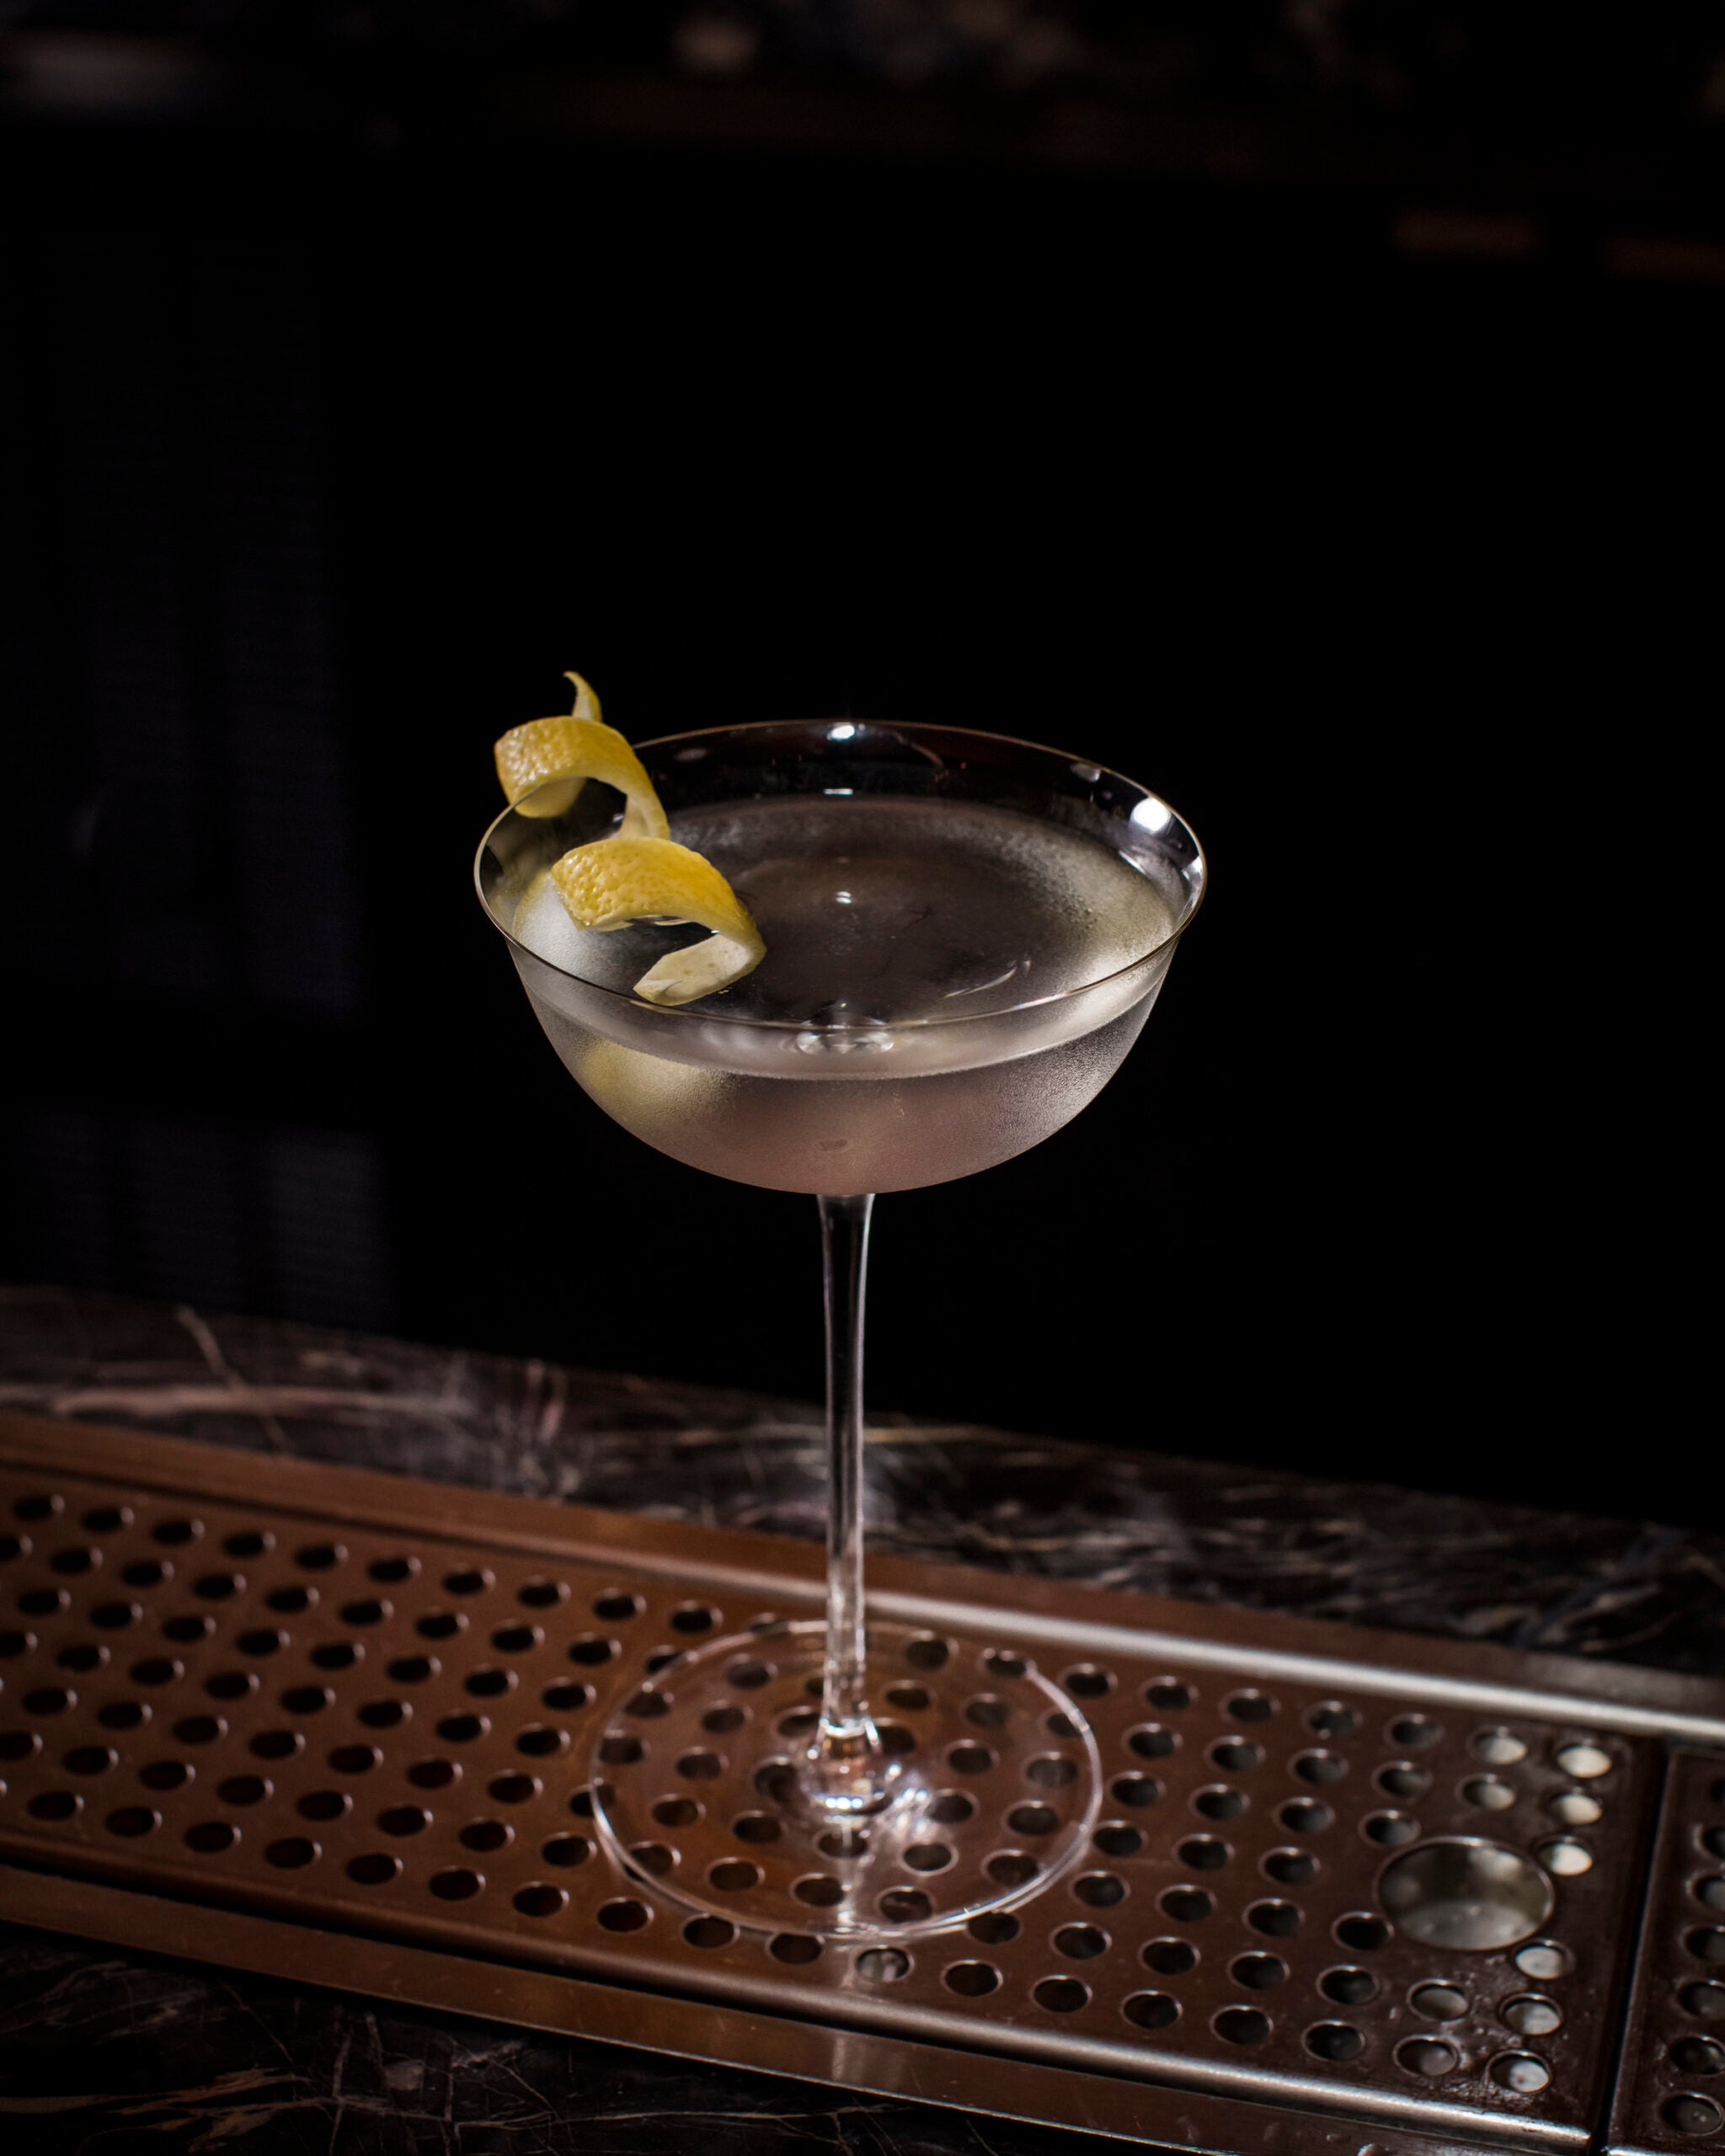 Martini with lemon garnish